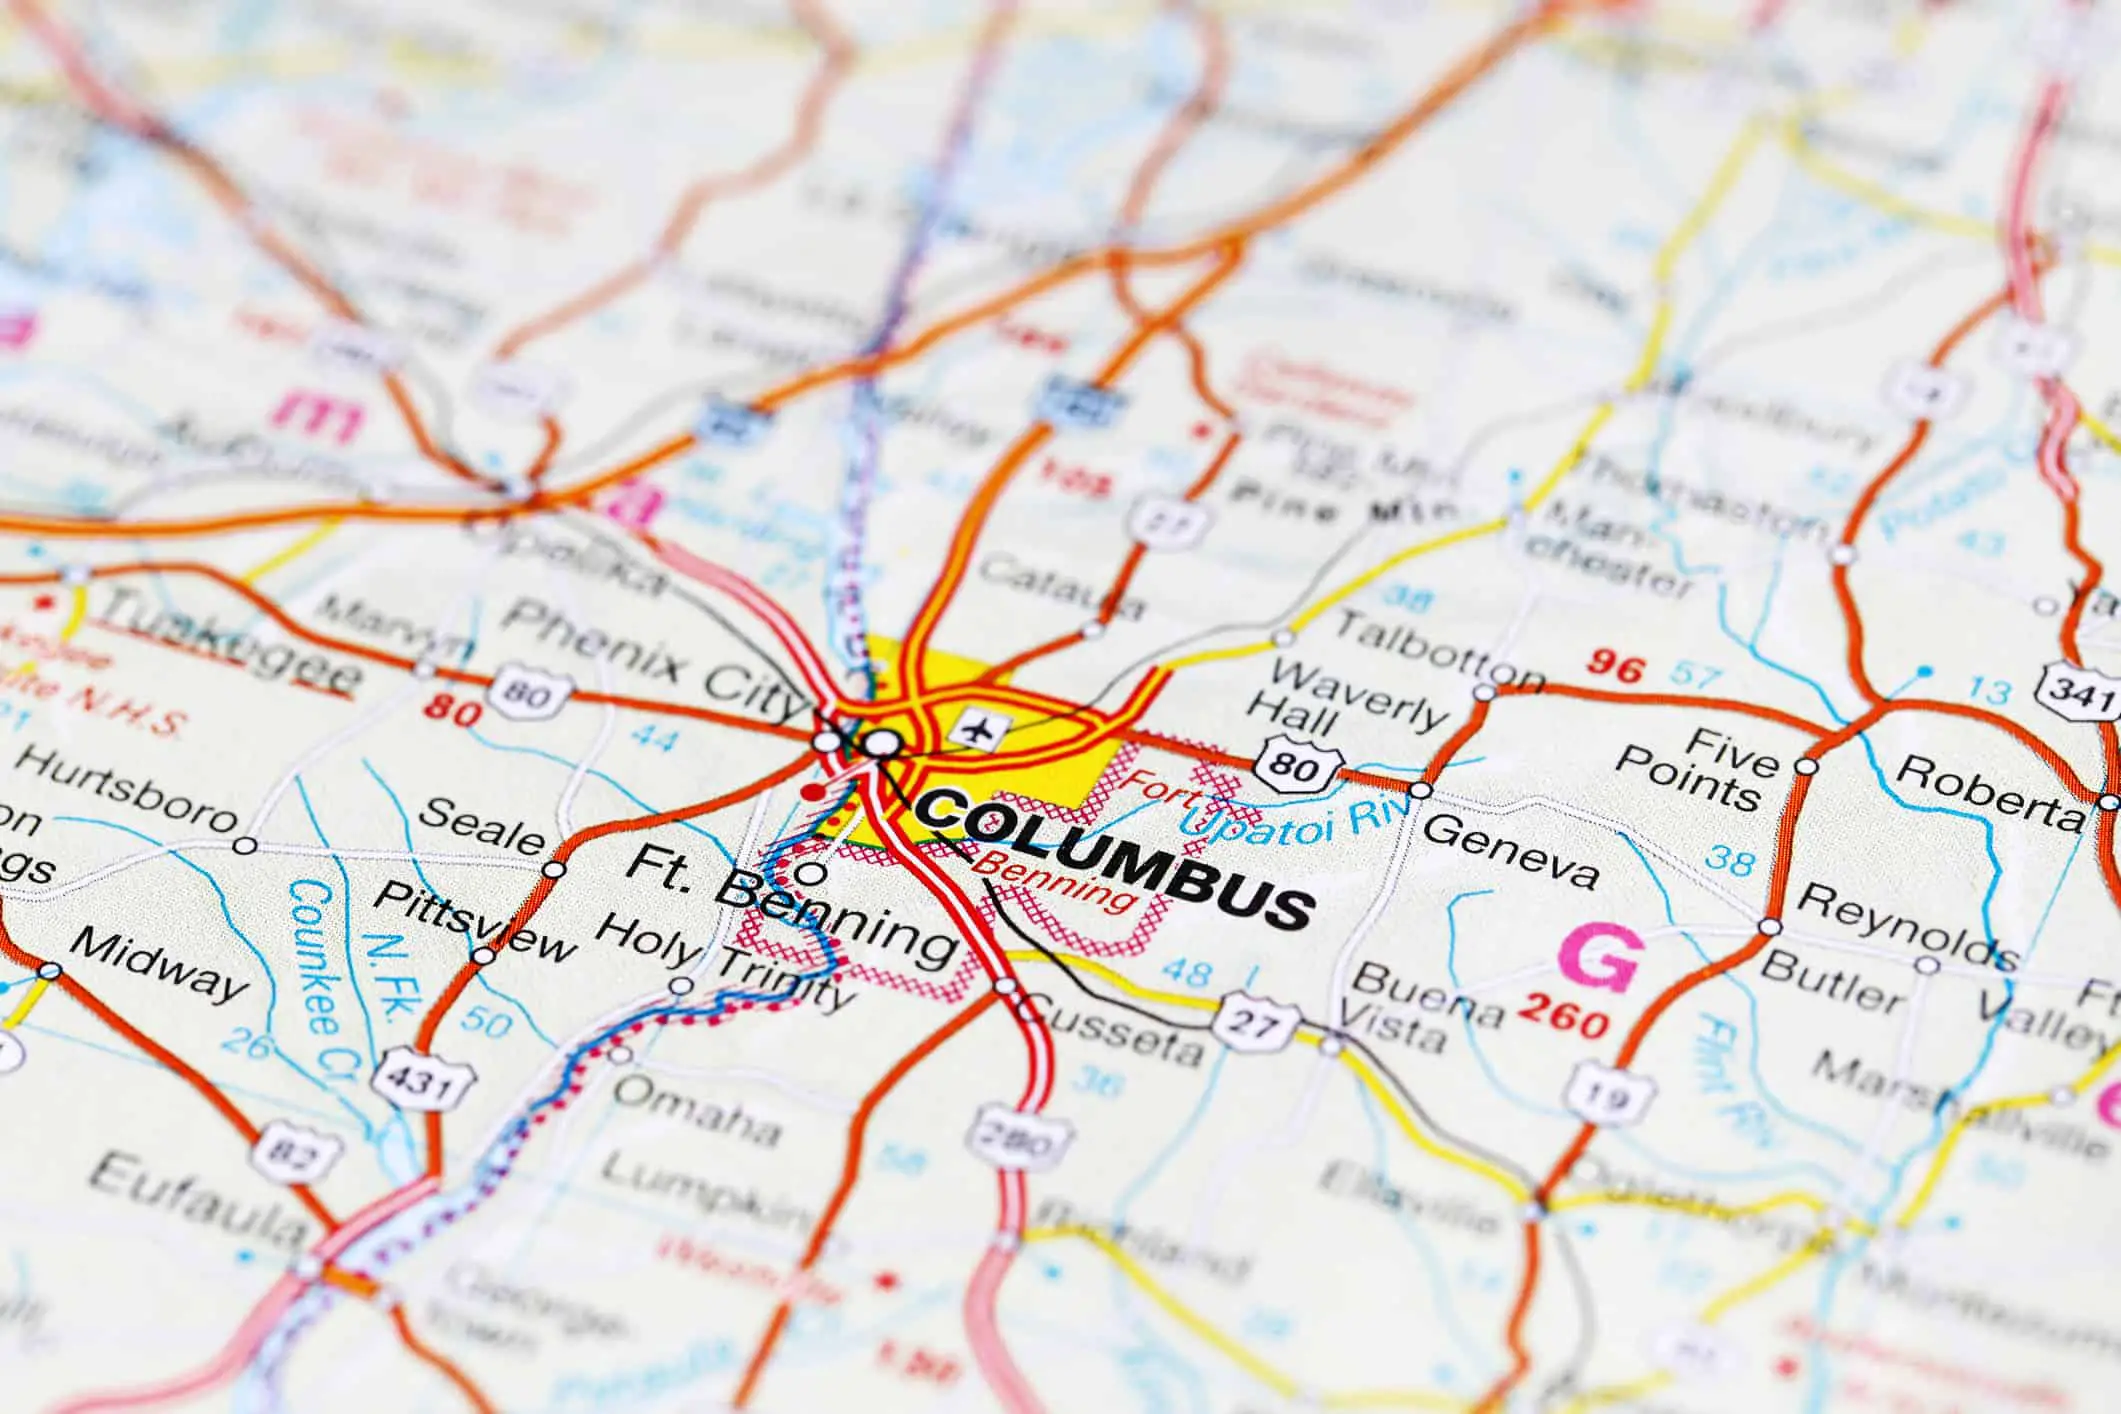 Columbus Georgia on Map